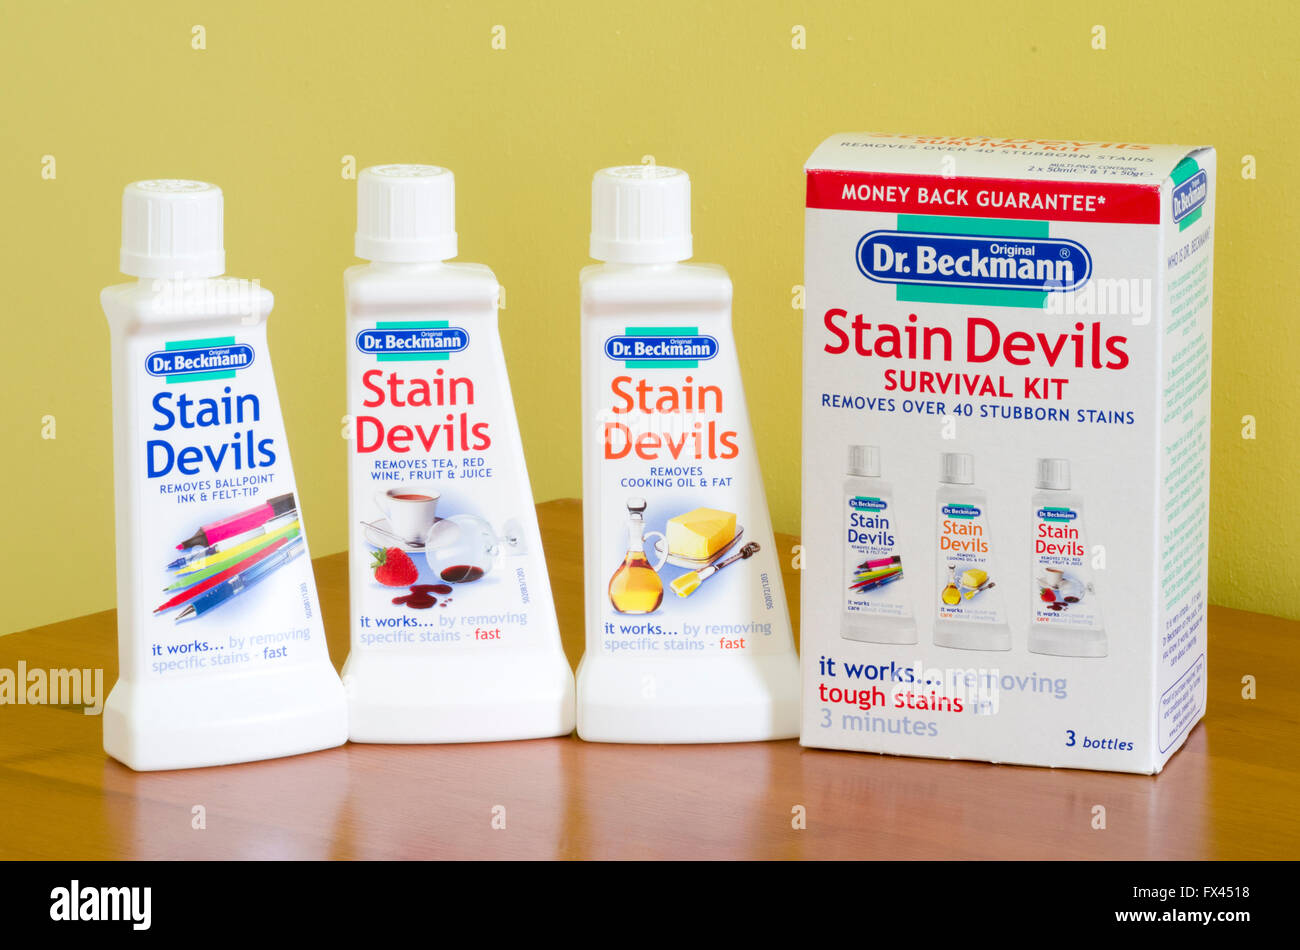 Dr. Beckmann Stain Devils Survival Kit Stock Photo - Alamy